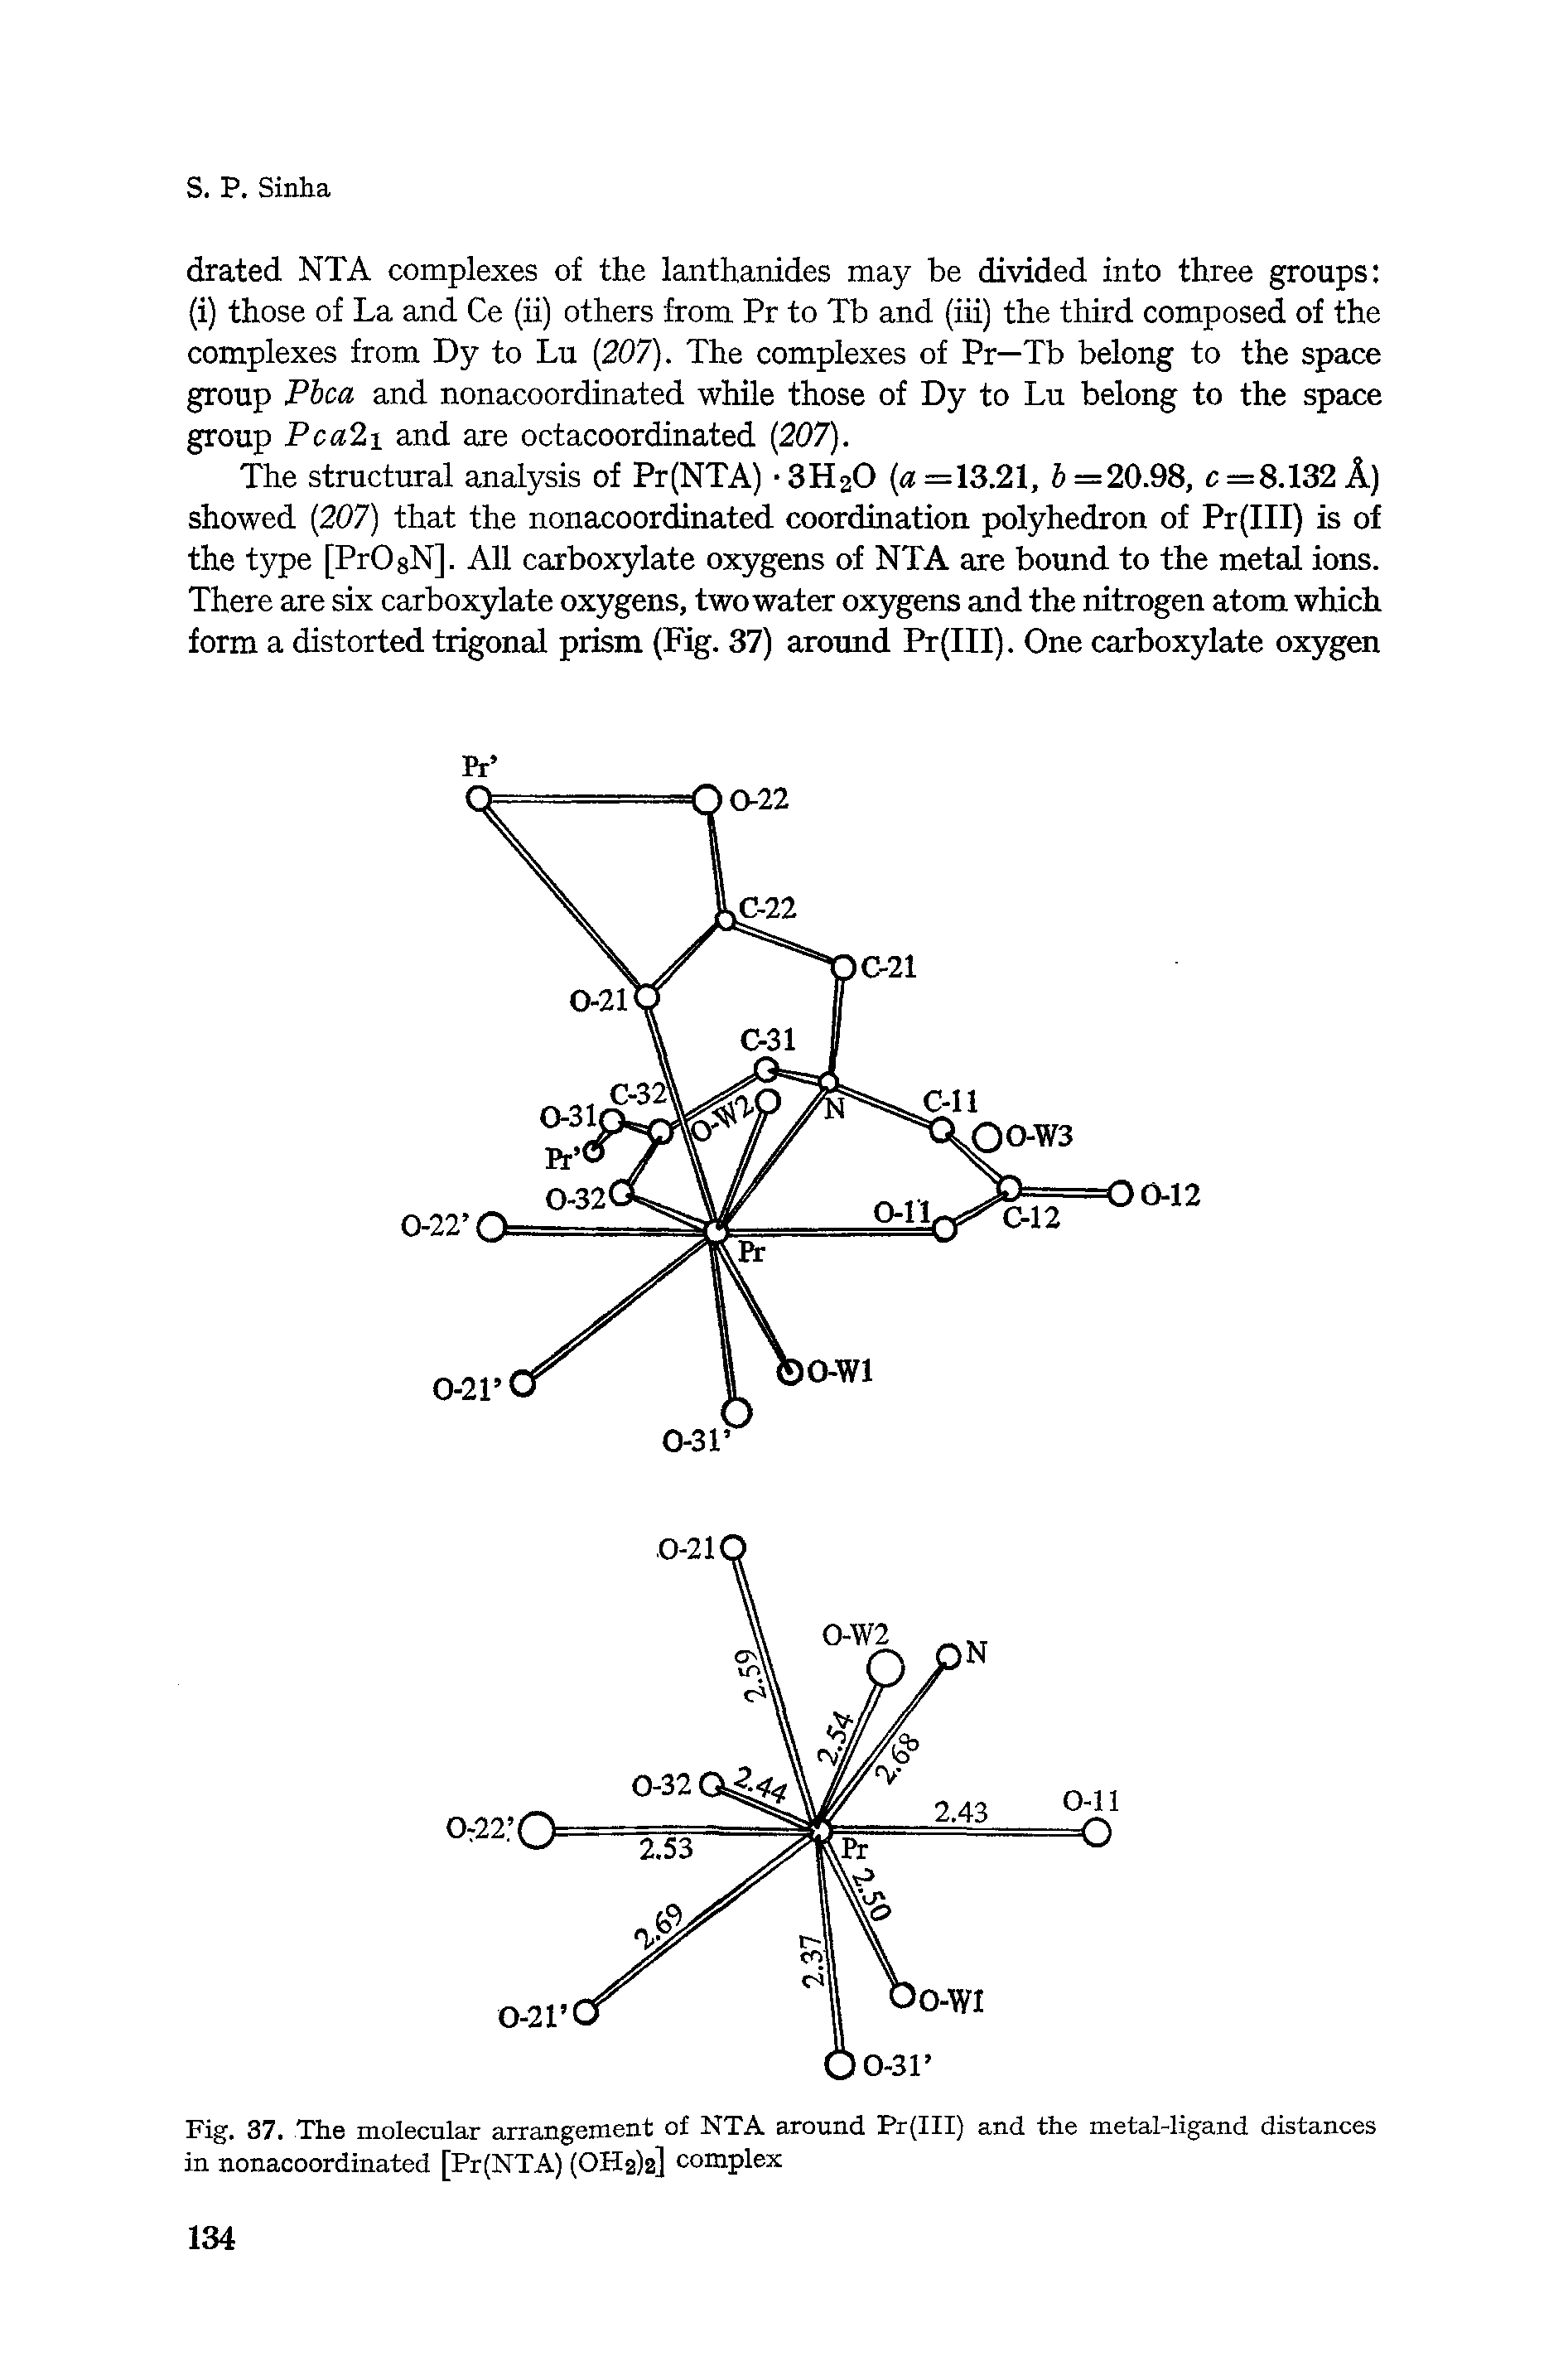 Fig. 37. The molecular arrangement of NTA around Pr(III) and the metal-ligand distances in nonacoordinated [Pr(NTA) (OH2)2] complex...